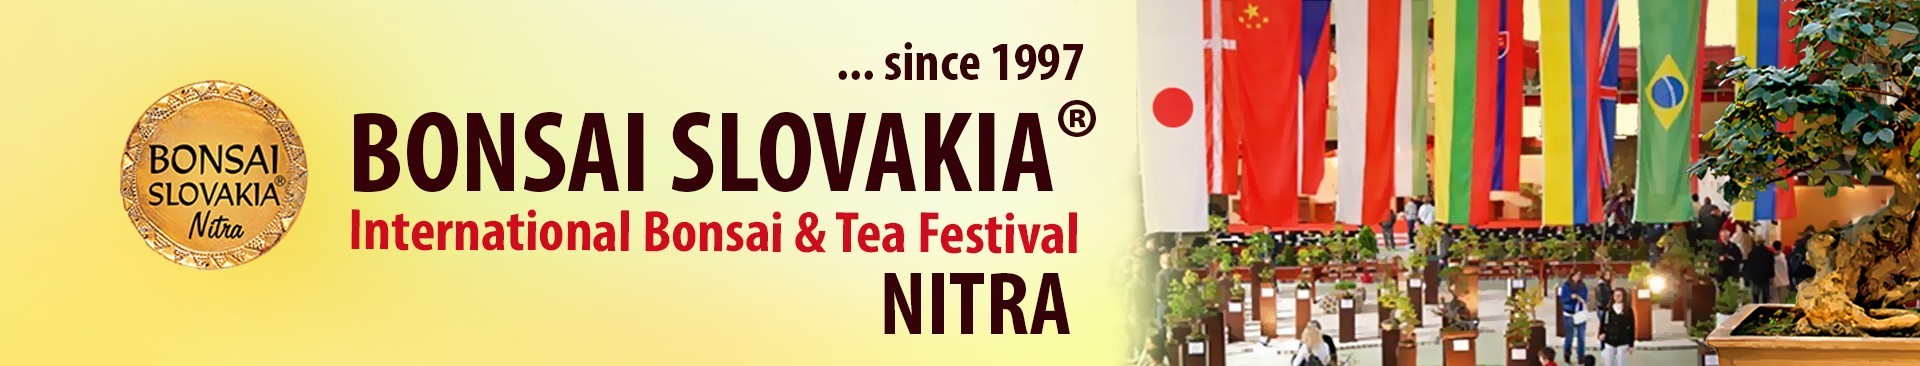 BONSAI SLOVAKIA - International Bonsai & Tea Festival